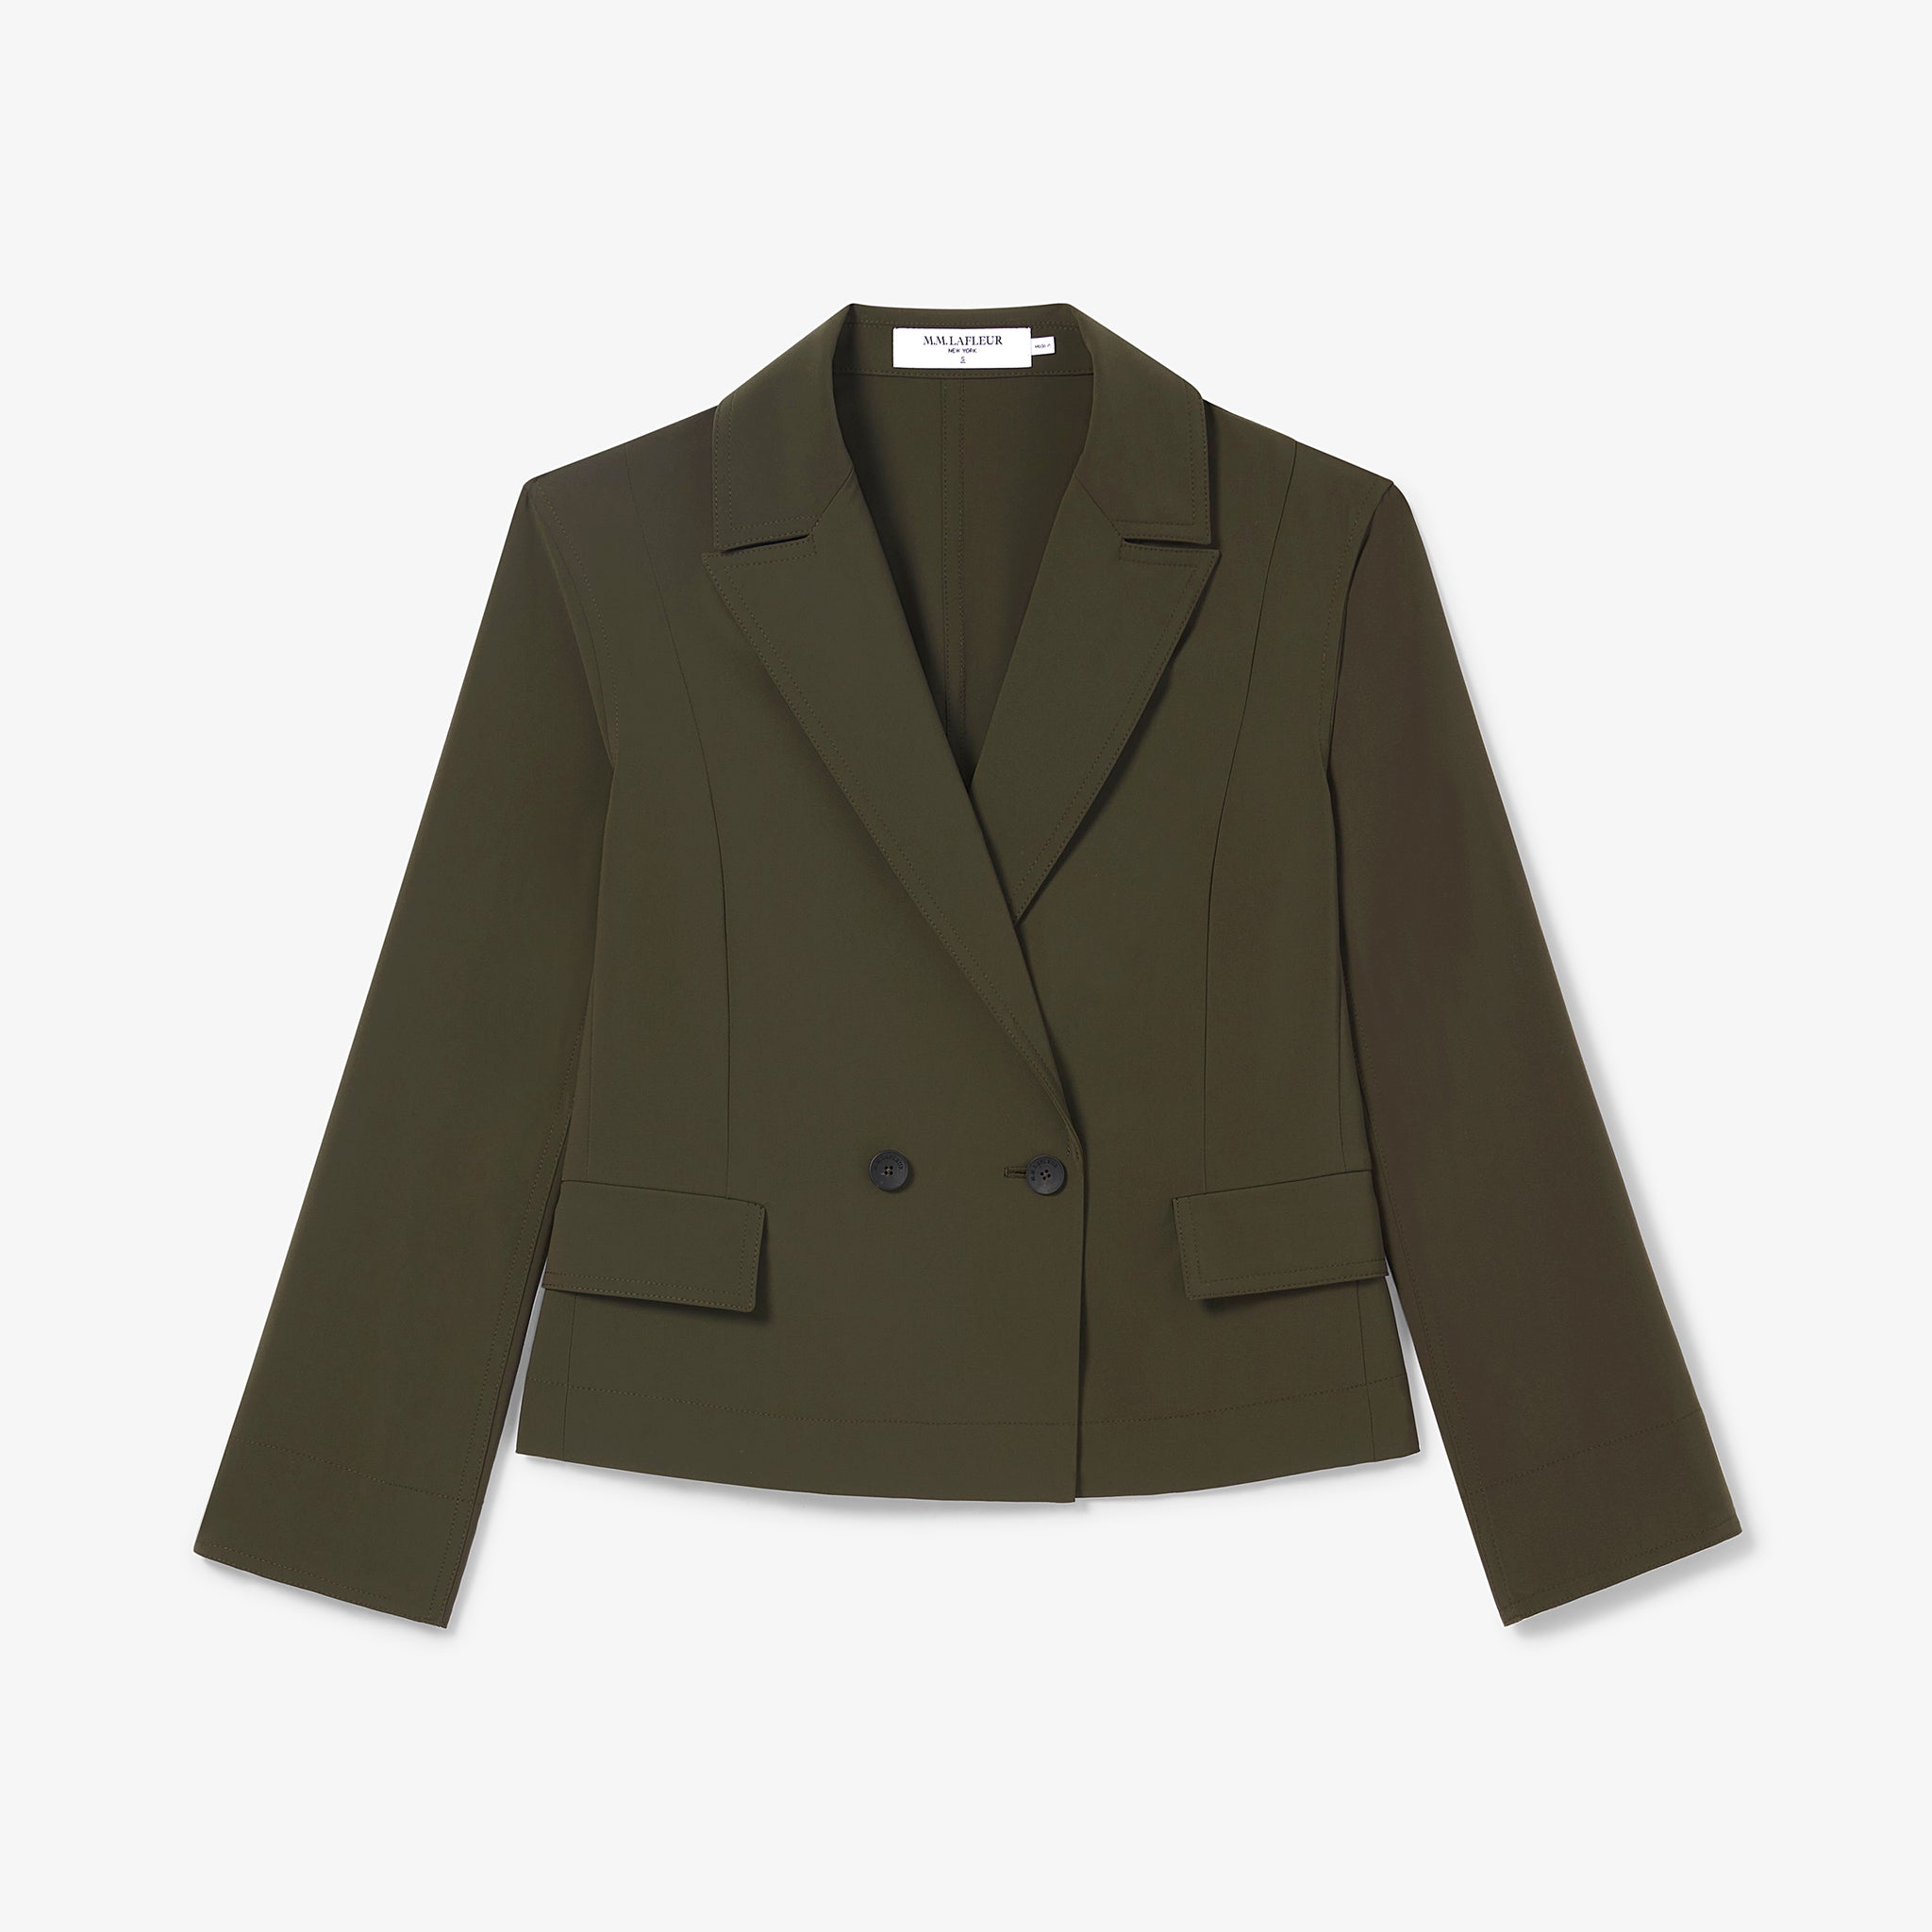 Packshot image of the Nia jacket in Olive